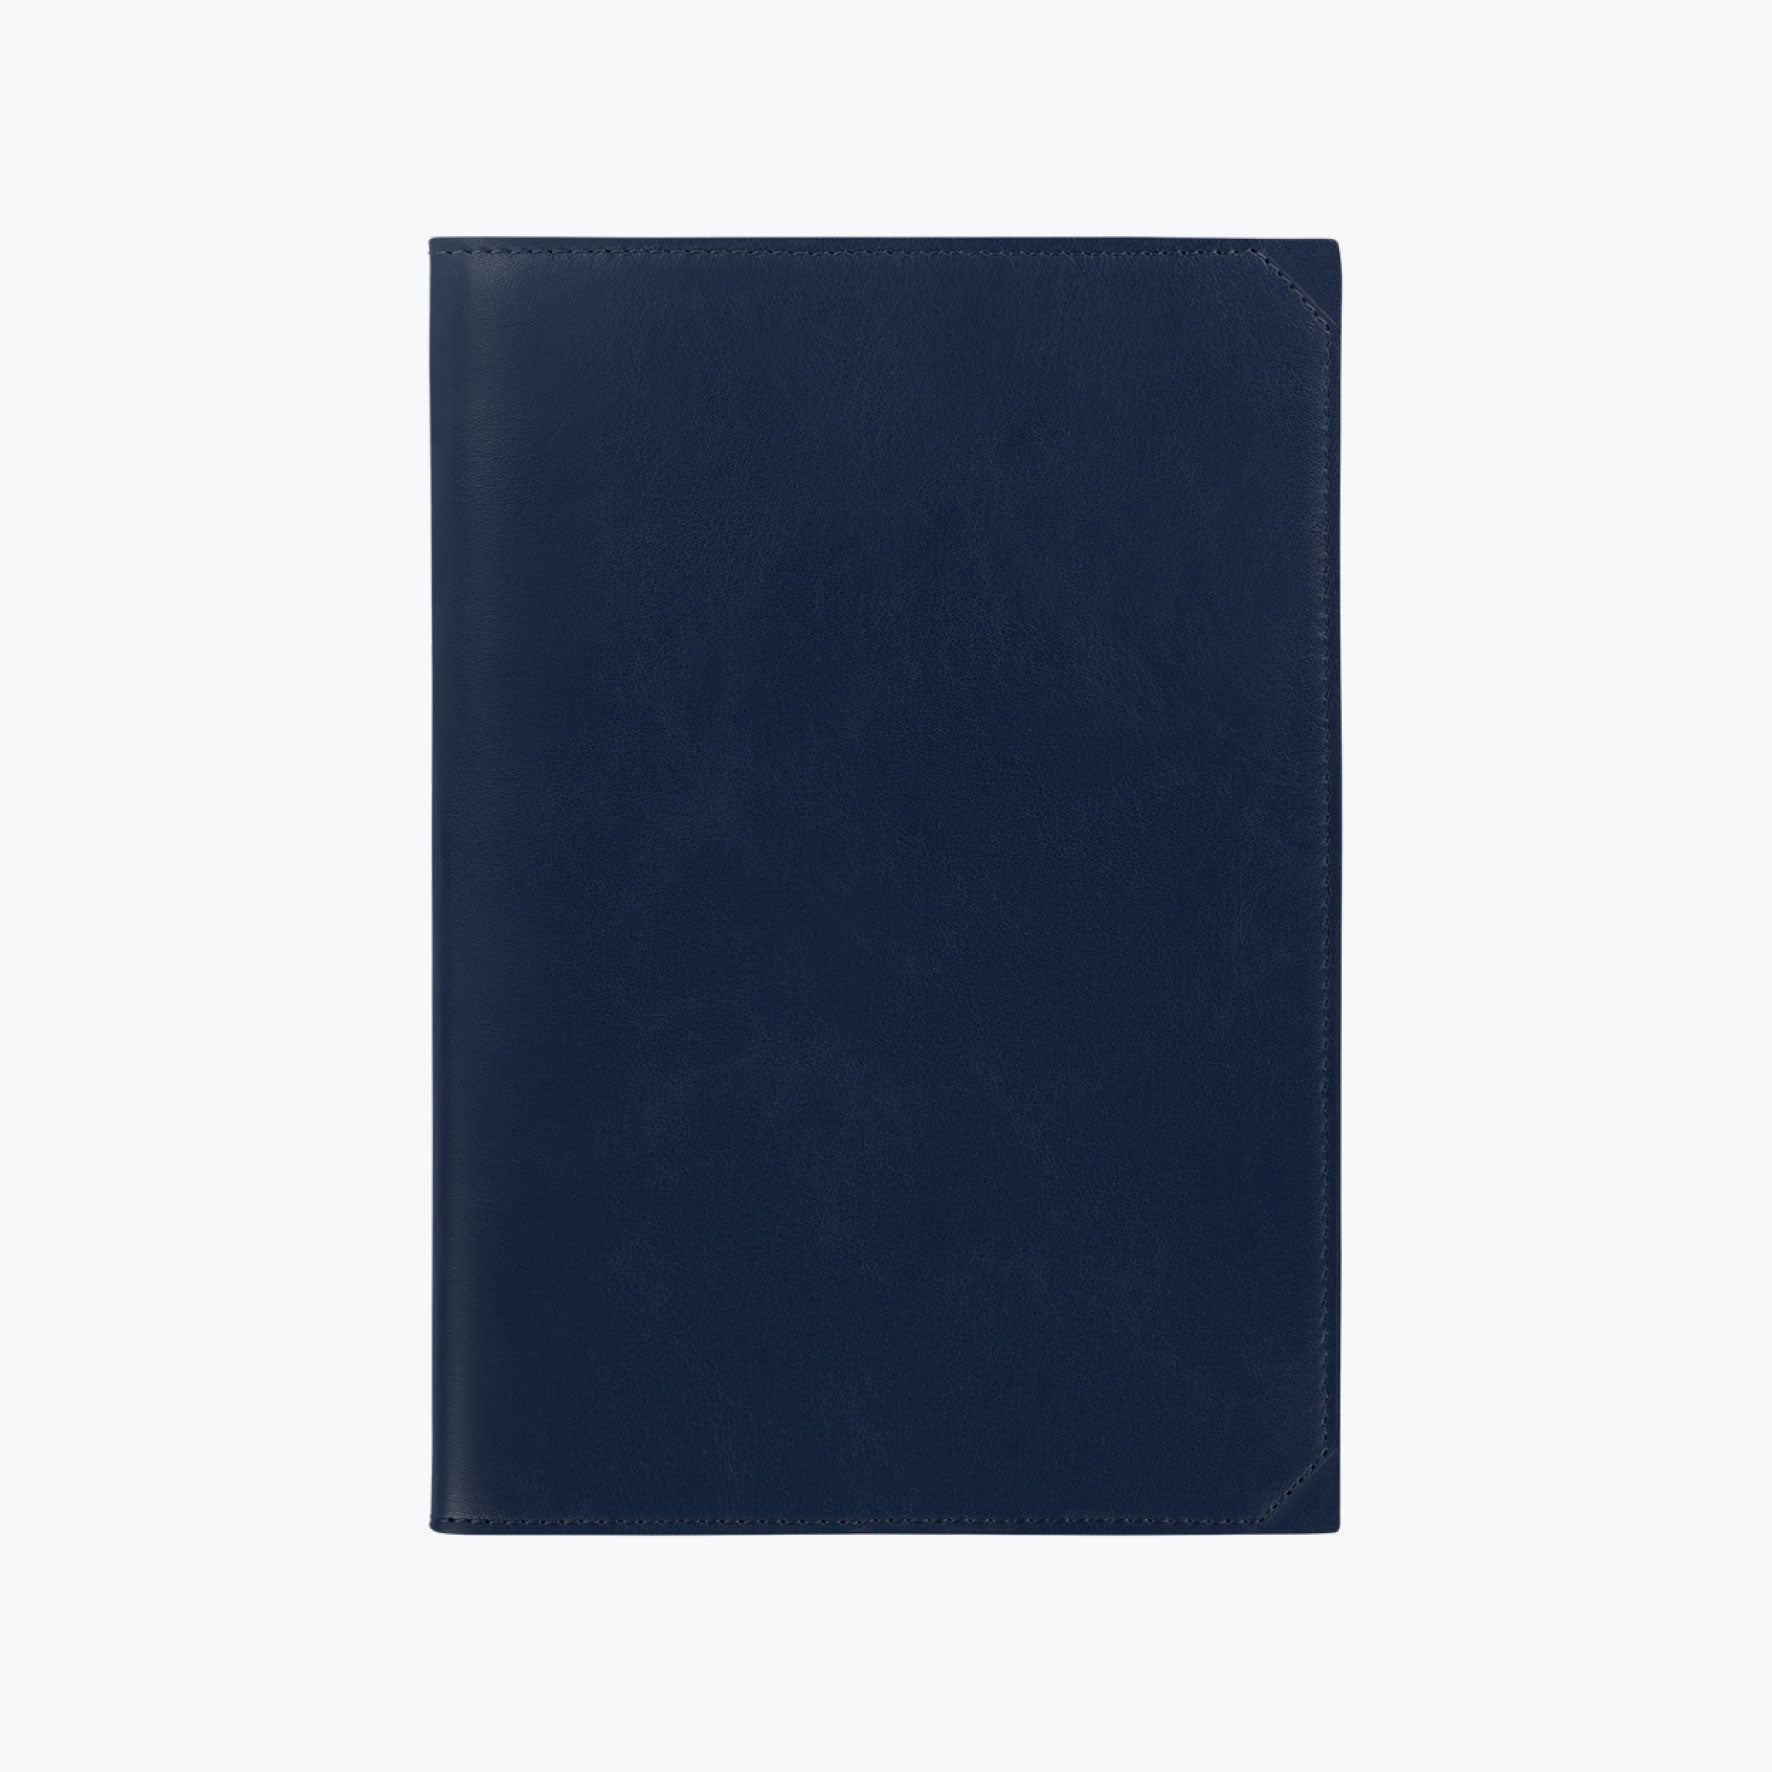 J. Herbin - Notebook - Leather - A5 - Navy